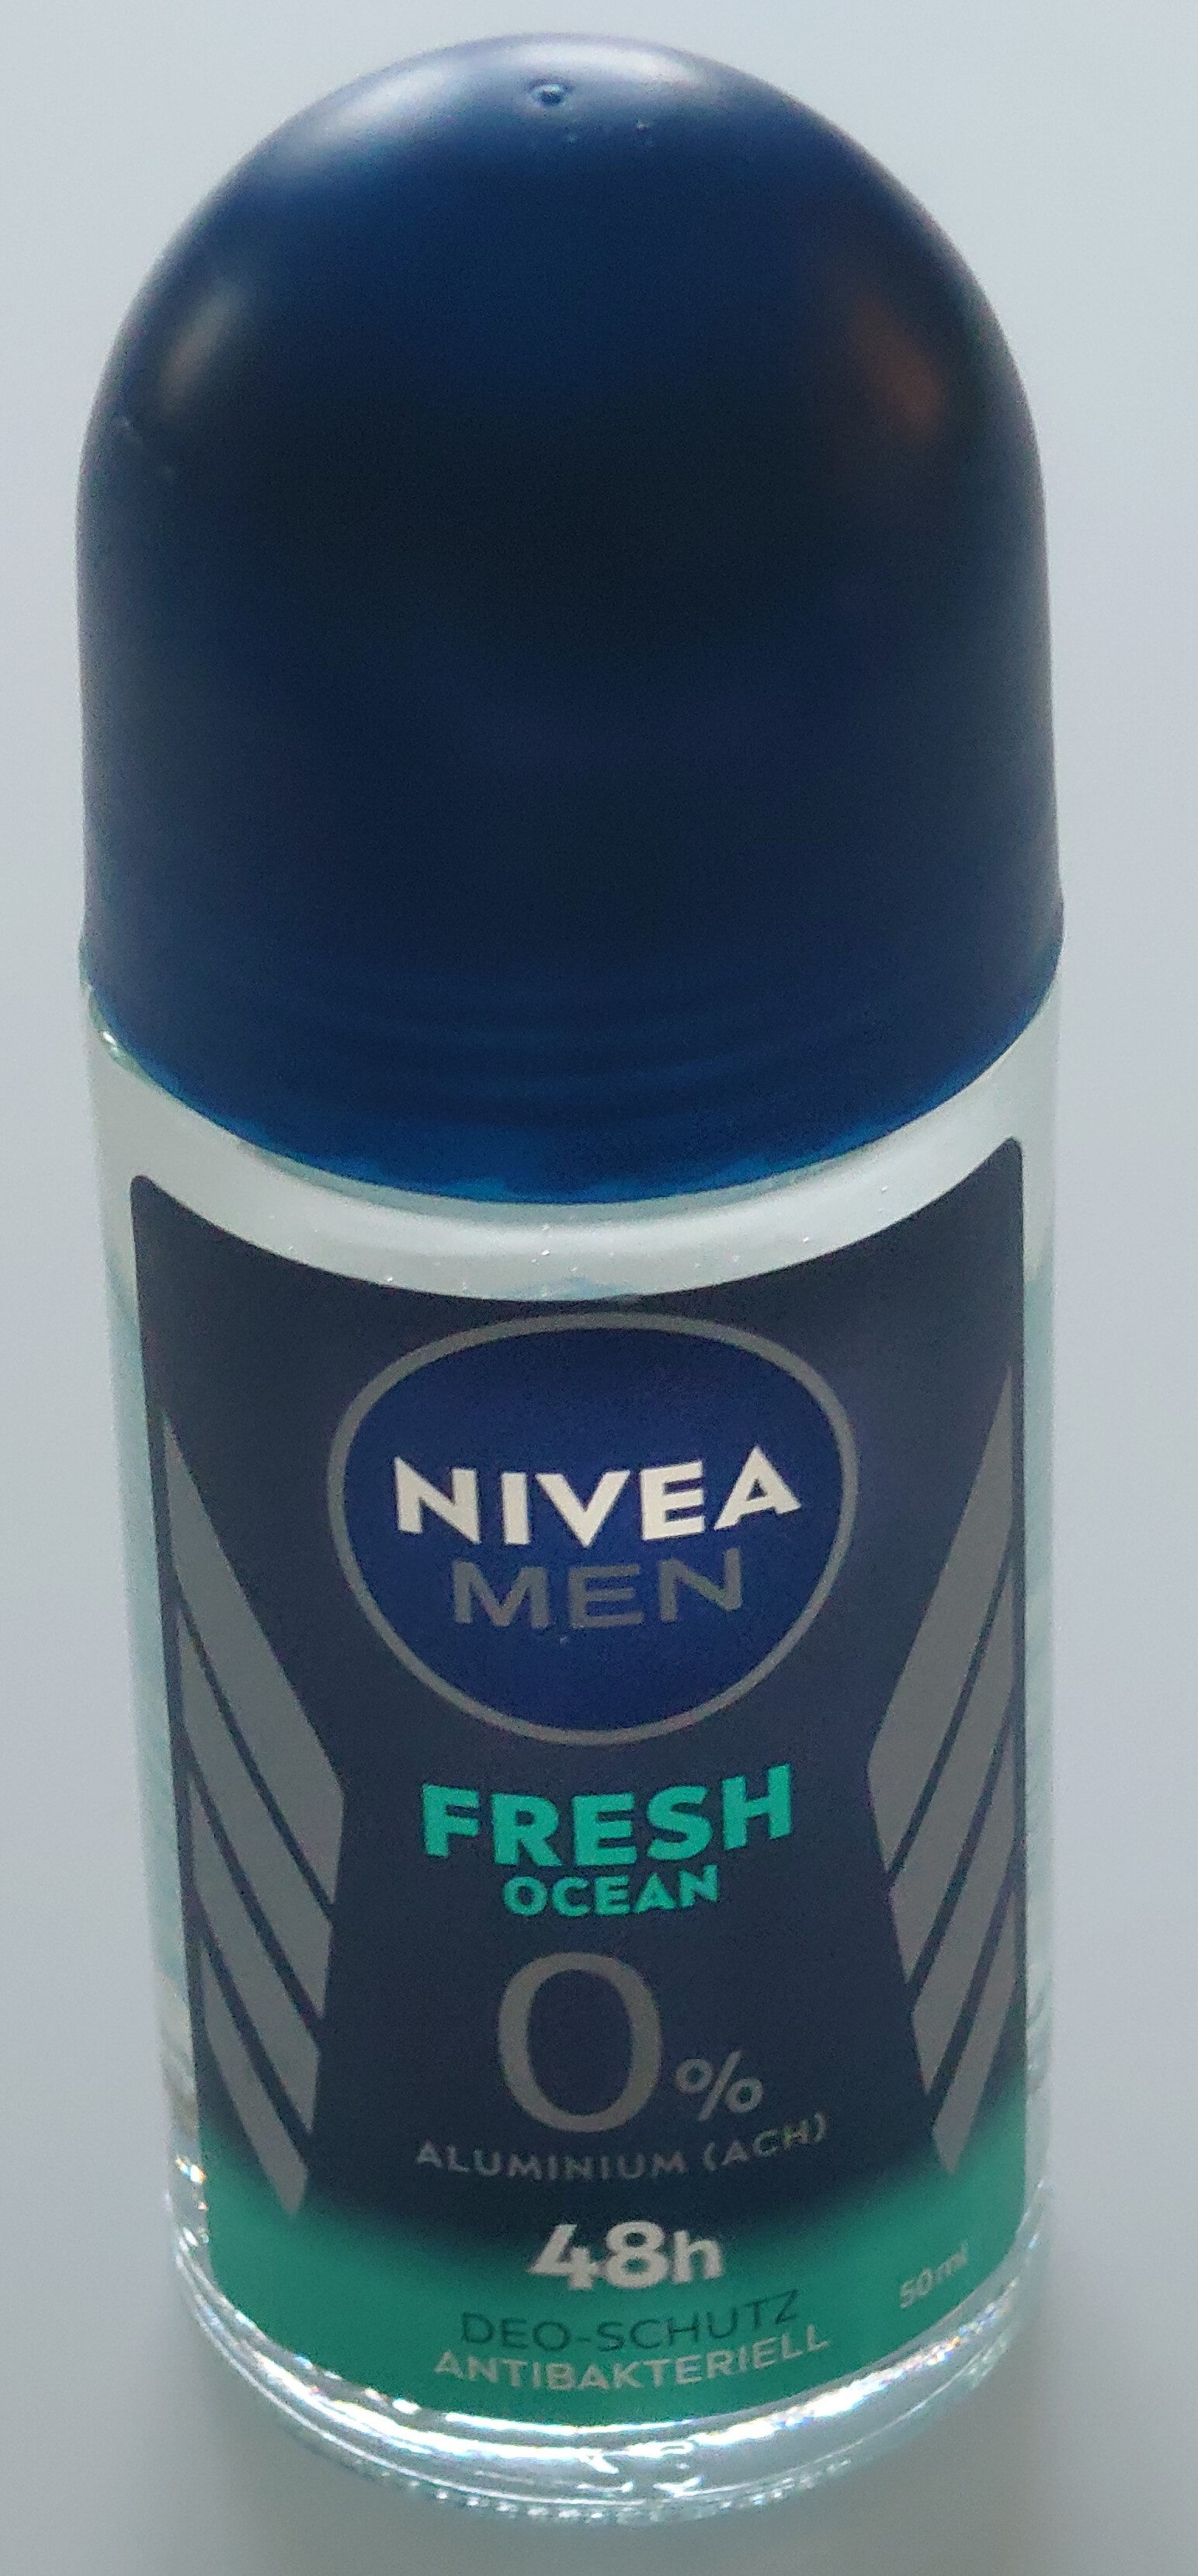 Nivea Man FRESH OCEAN 0% Aluminium (ACH) 48h Deo-Schutz Antibakteriell - Product - de